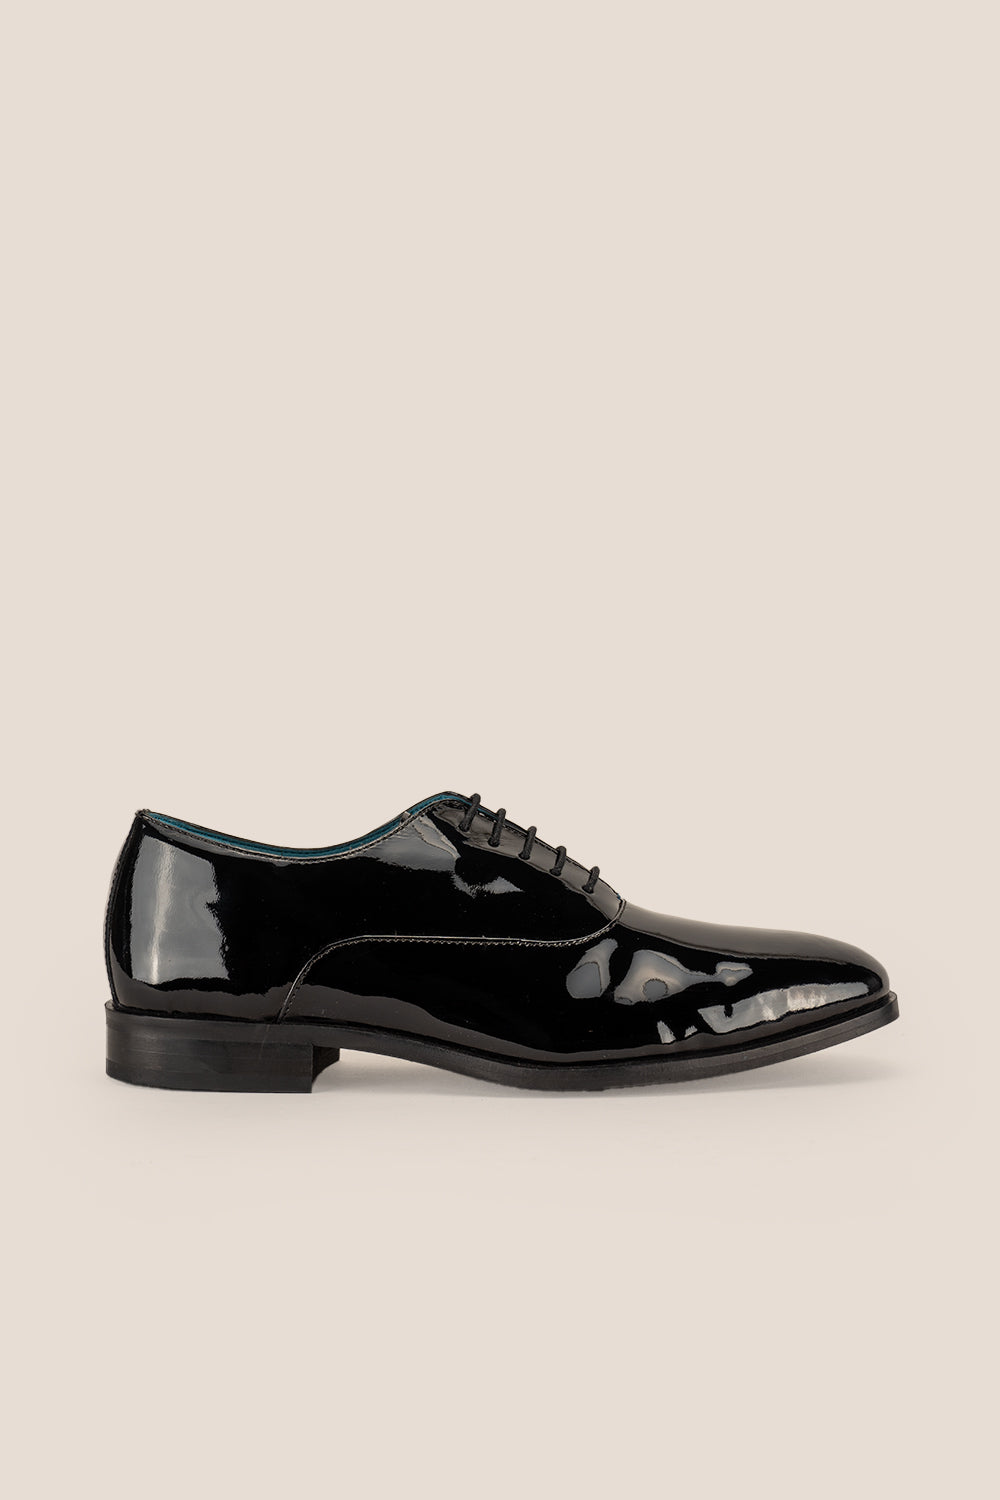 Duke Black Patent Leather Oxford Shoe | Oswin Hyde